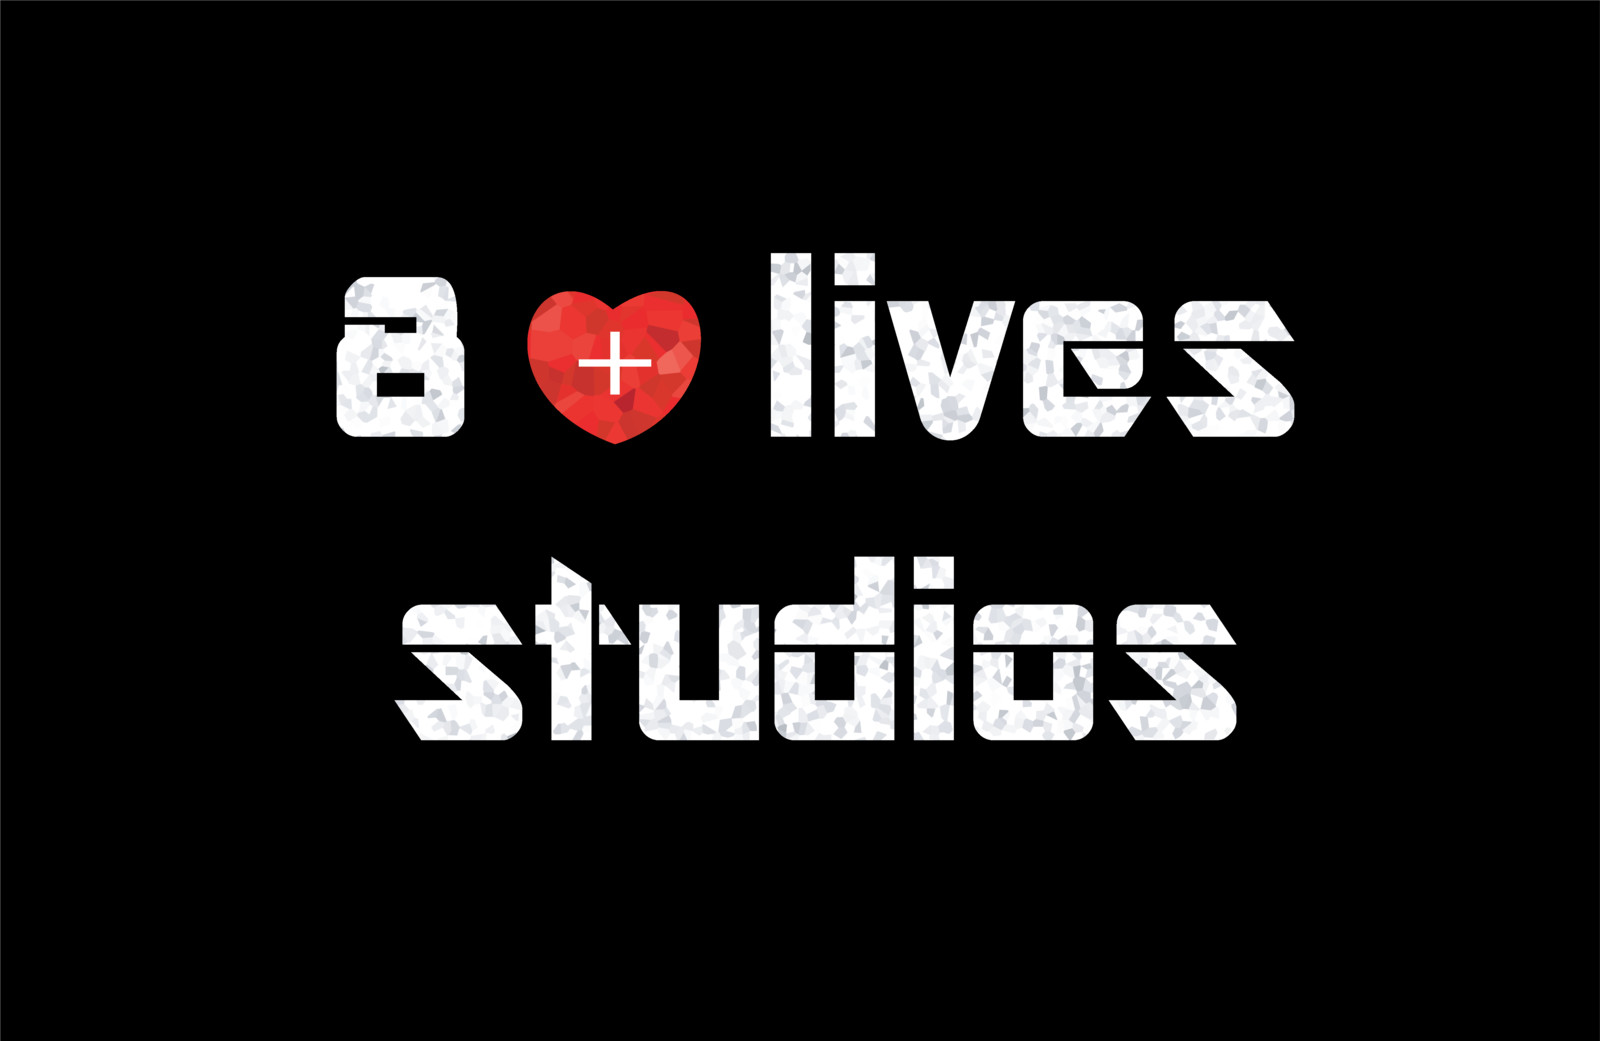 8 Lives Studios logo